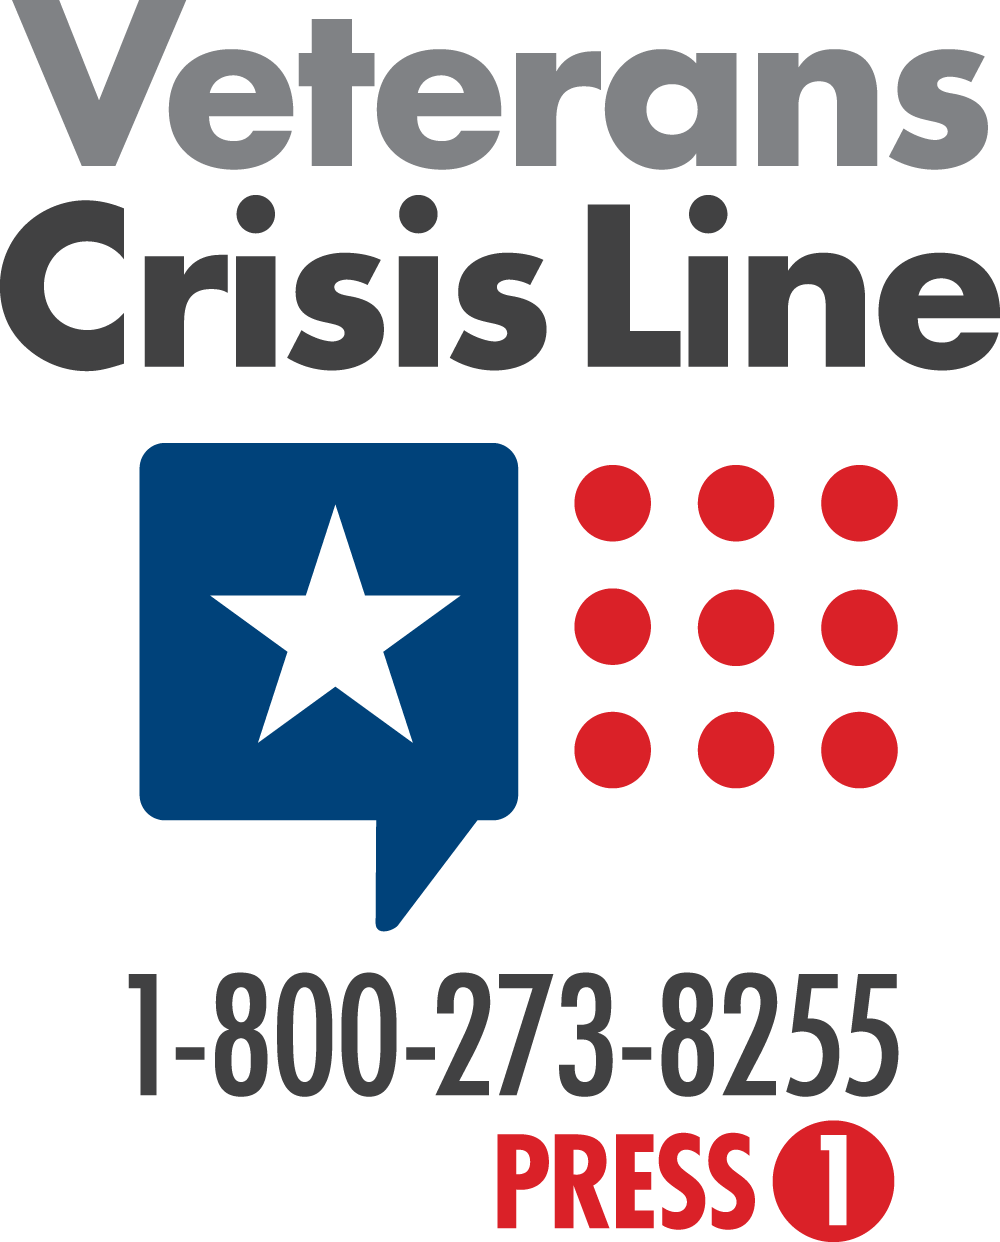 Veterans Crisis Line 1-800-273-8255. Press 1.